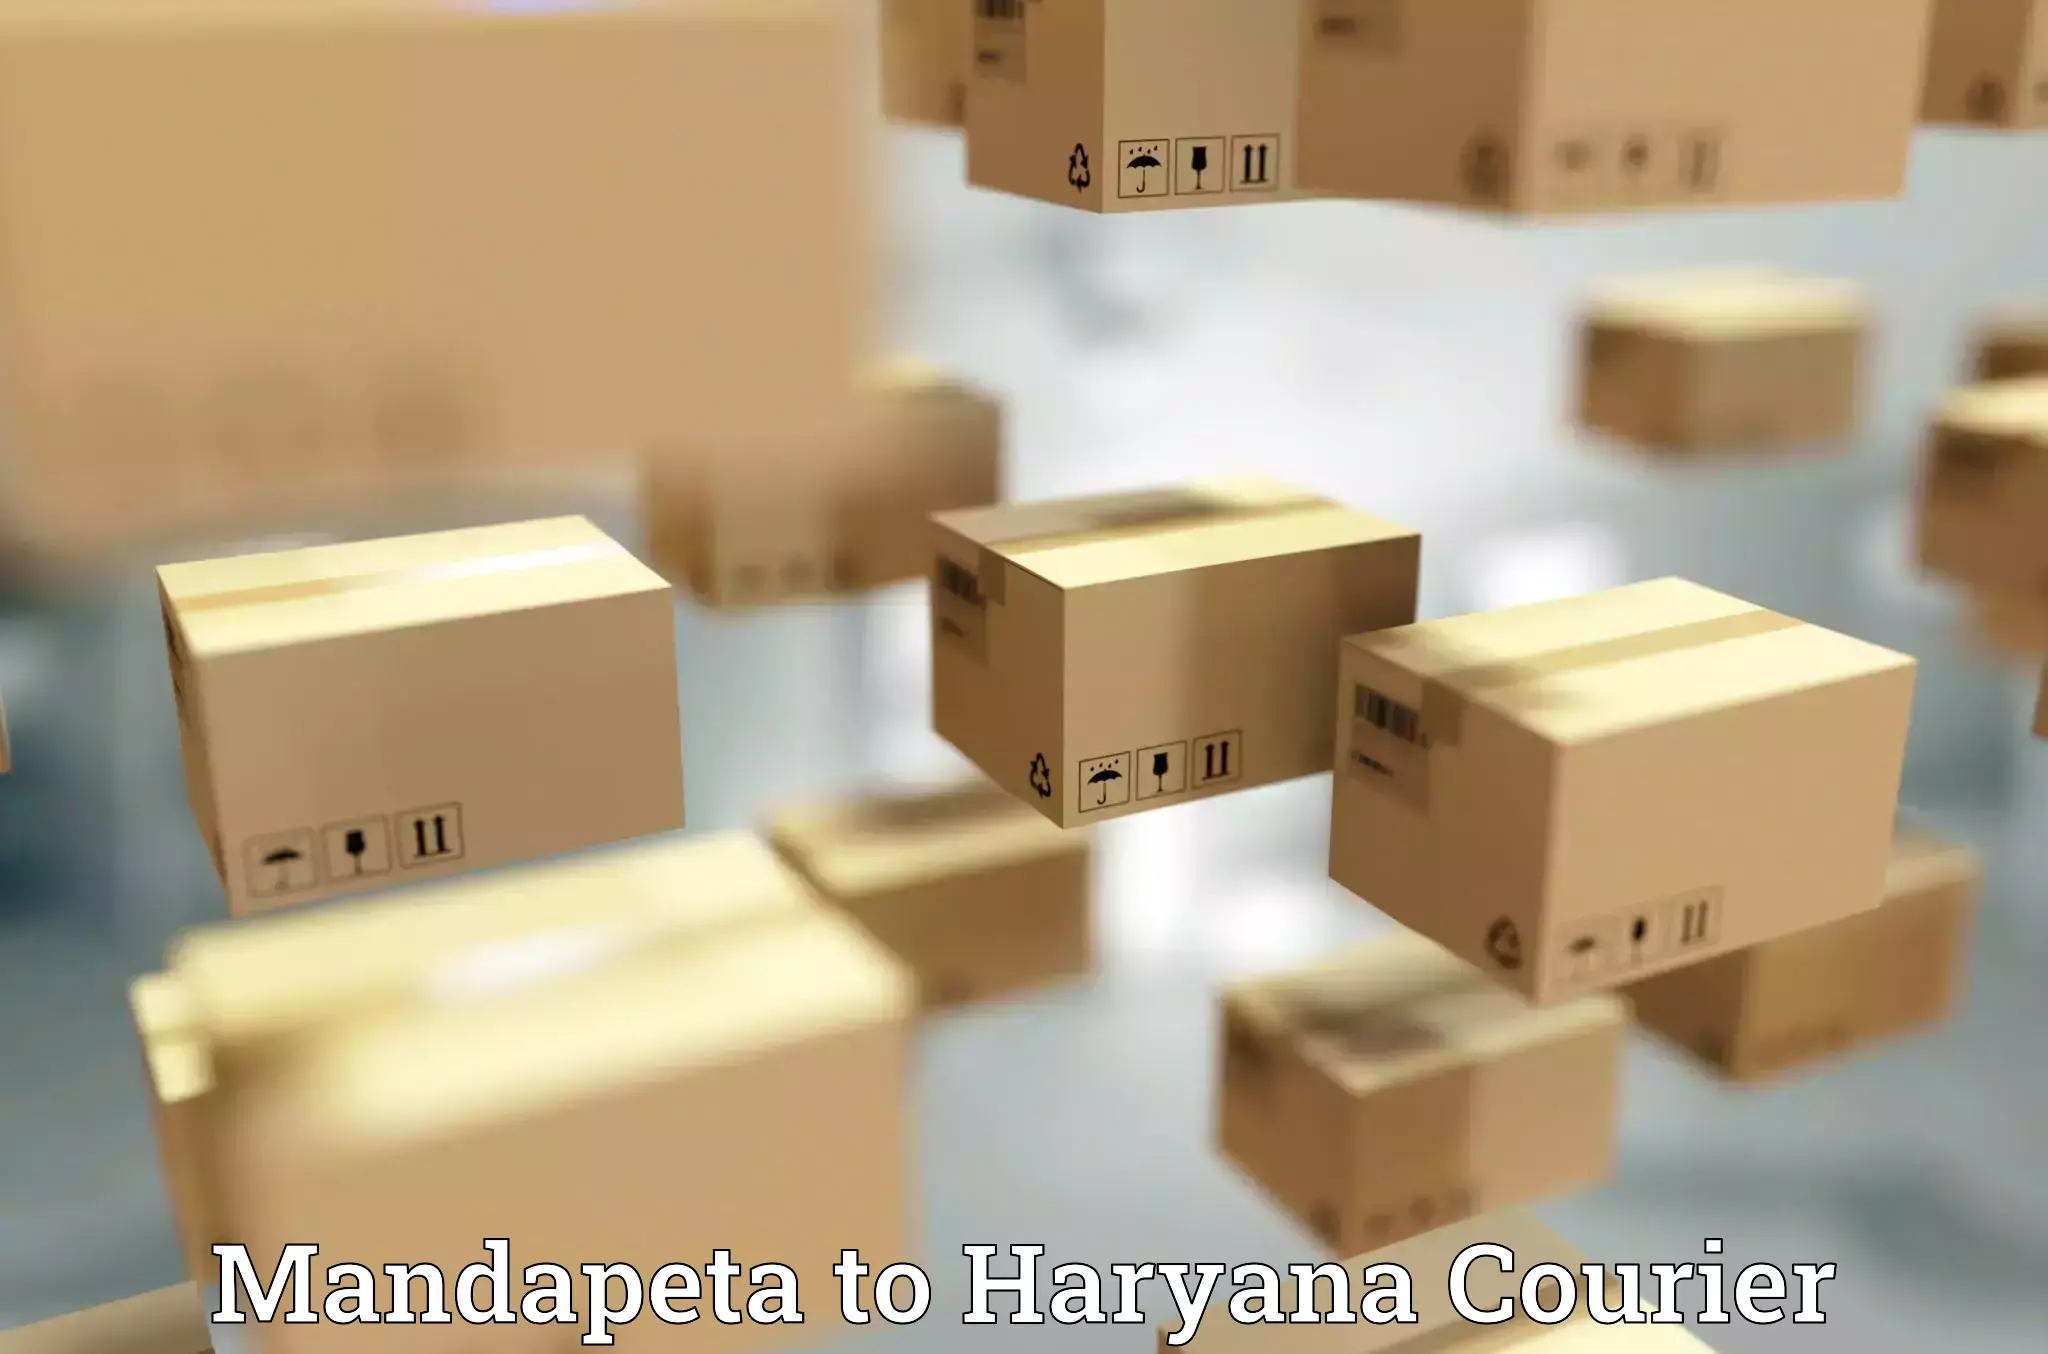 Courier service comparison Mandapeta to Hansi